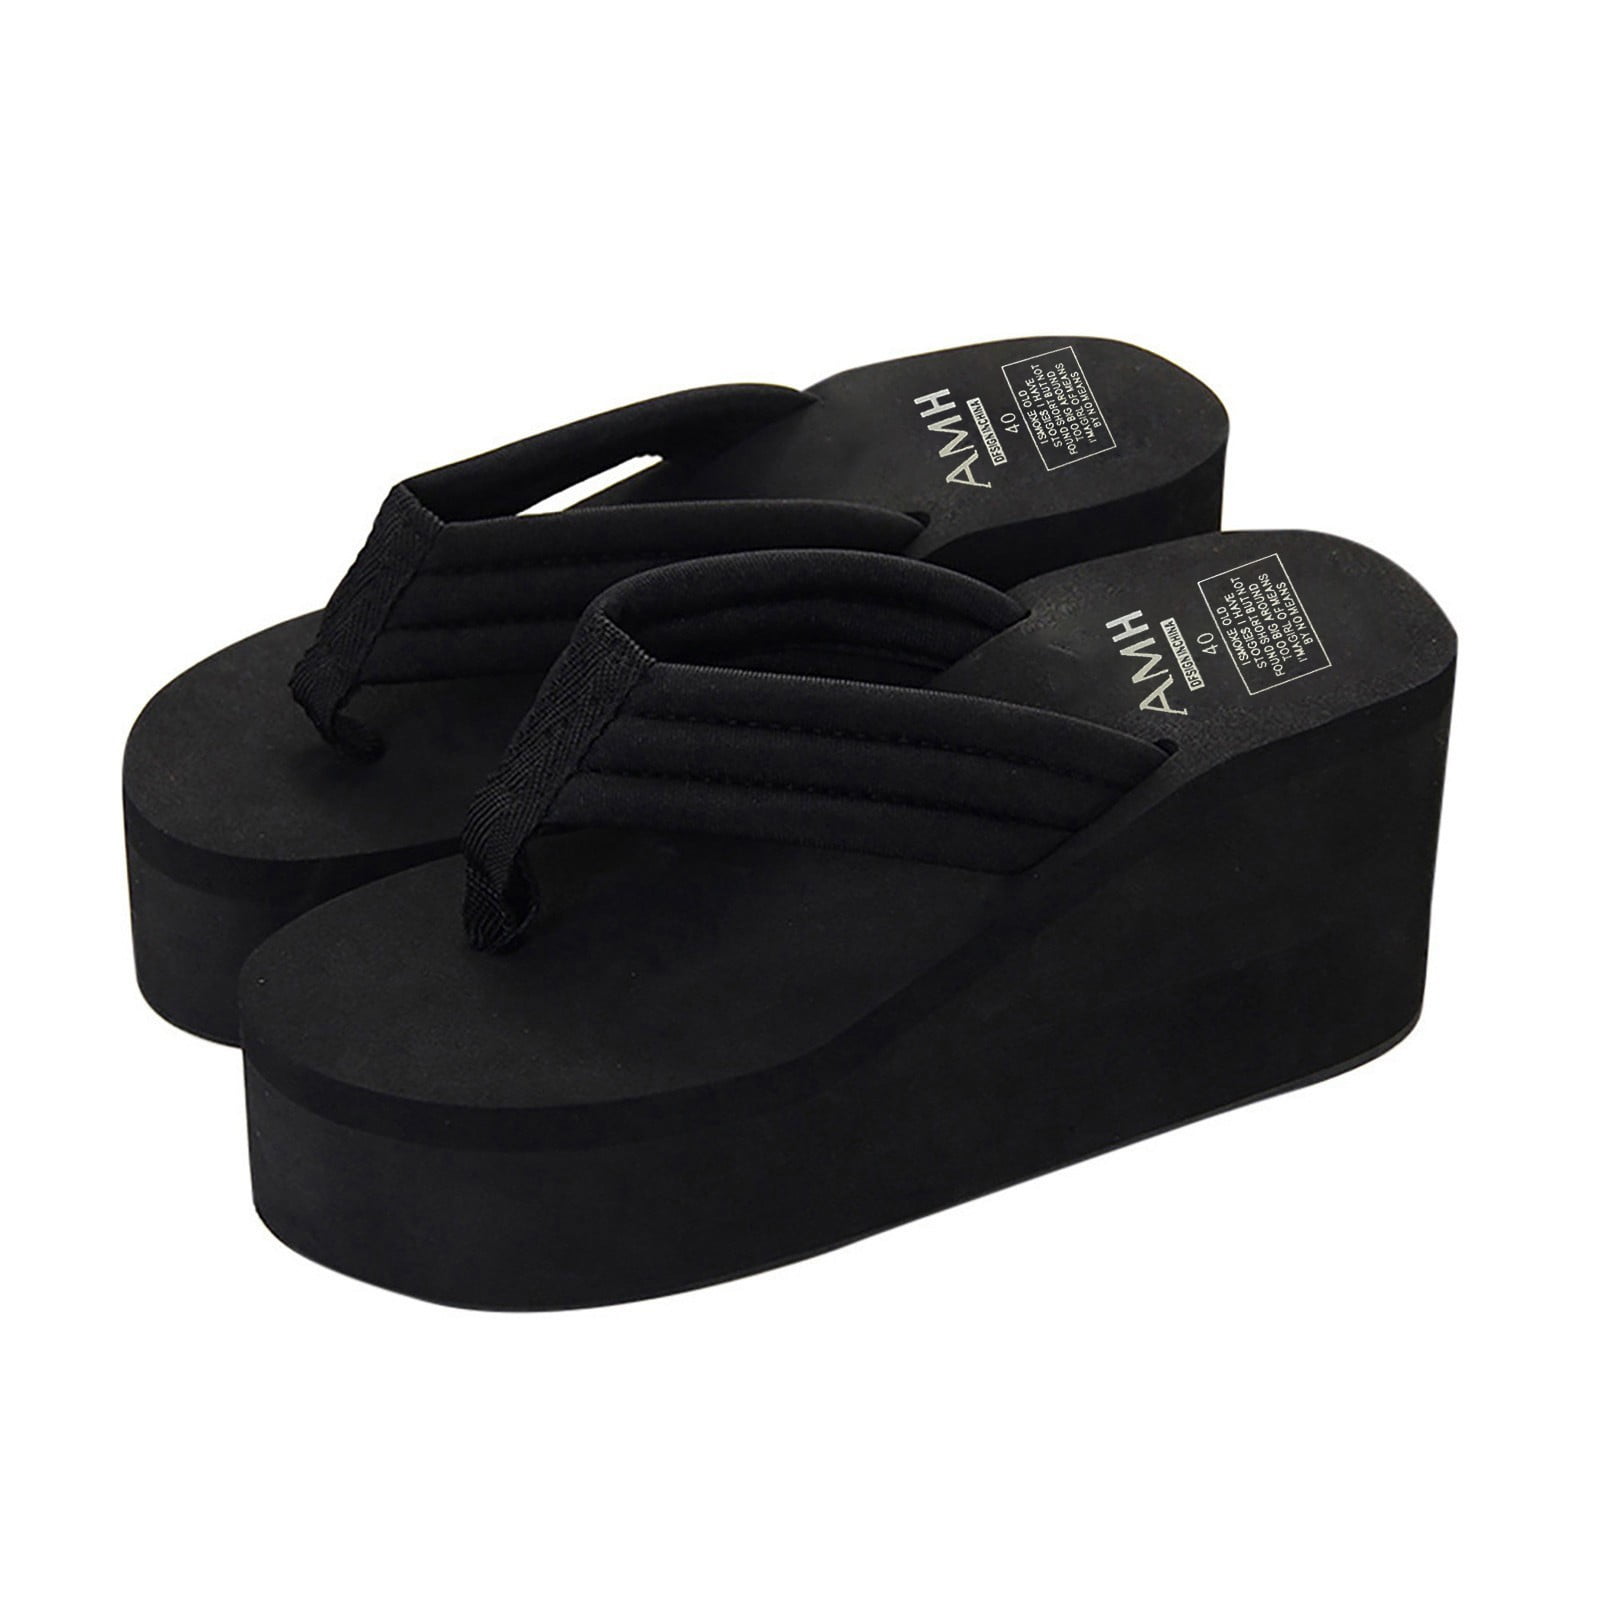 Ichuanyi Sandals for Women Clearance Women Summer Slipsole Platform ...